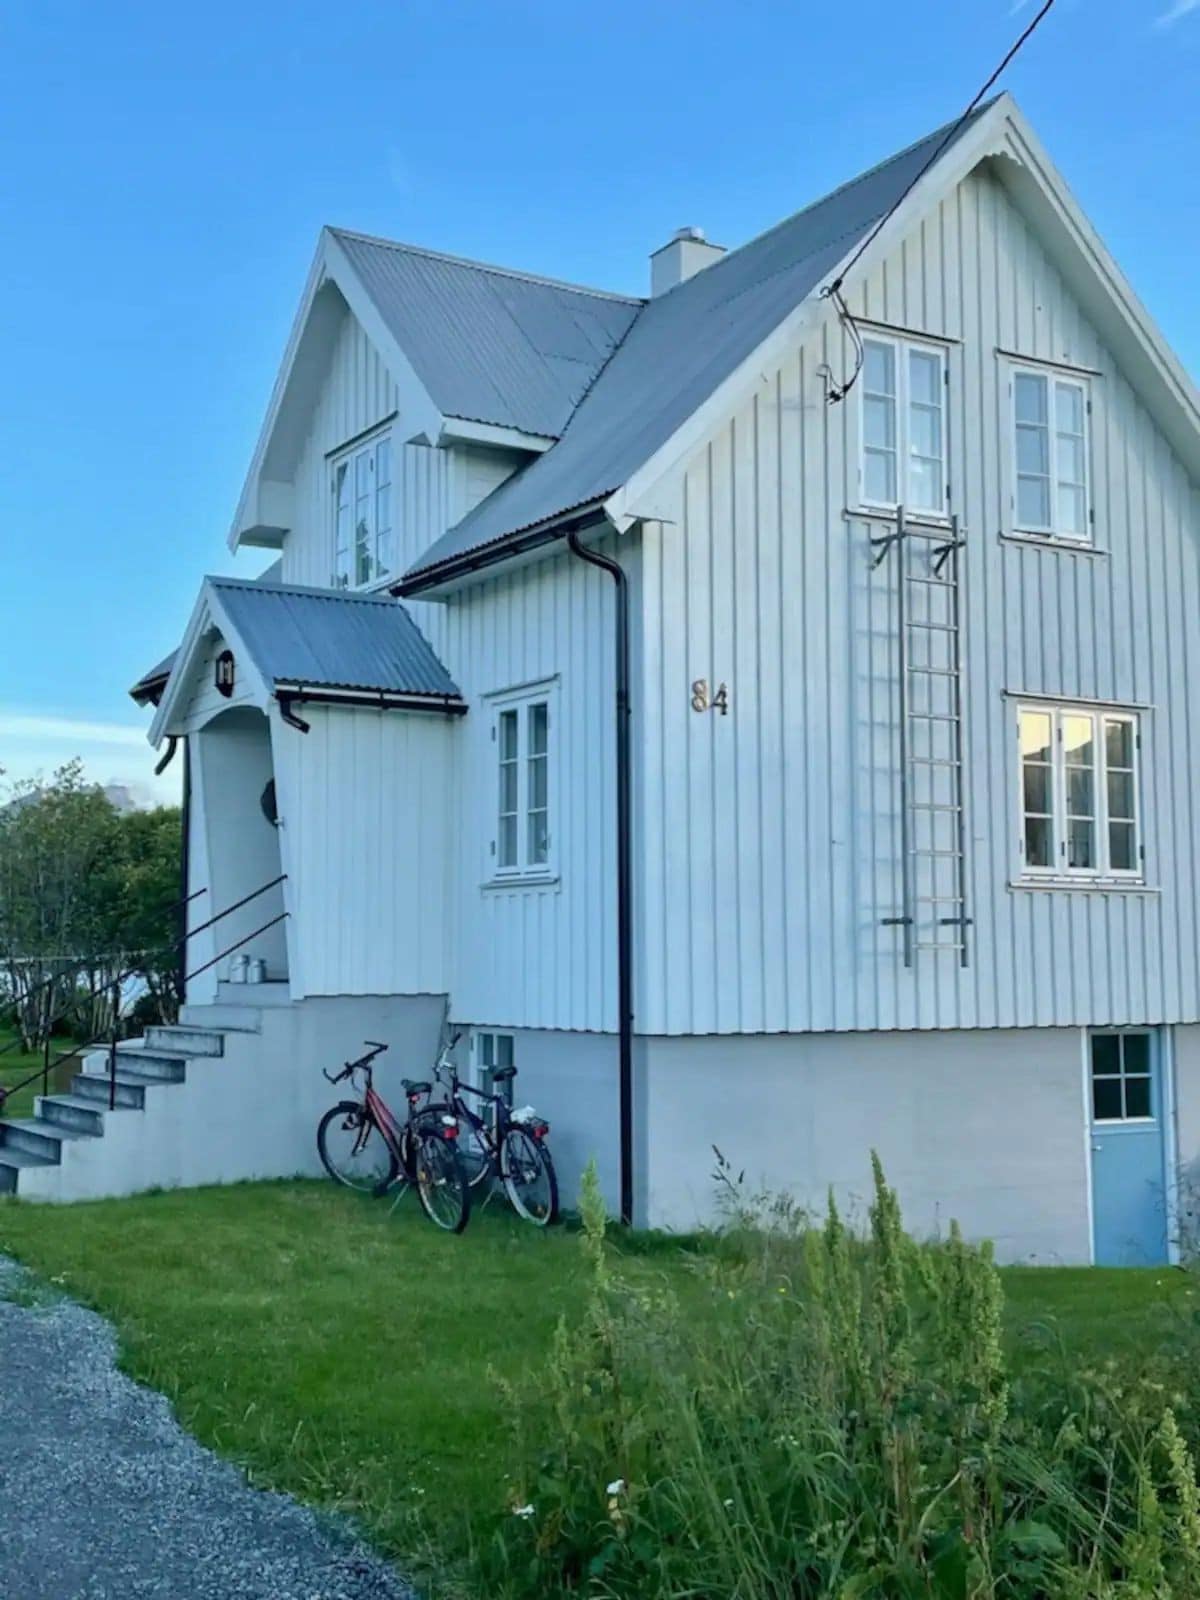 Fredvang holiday house, Lofoten